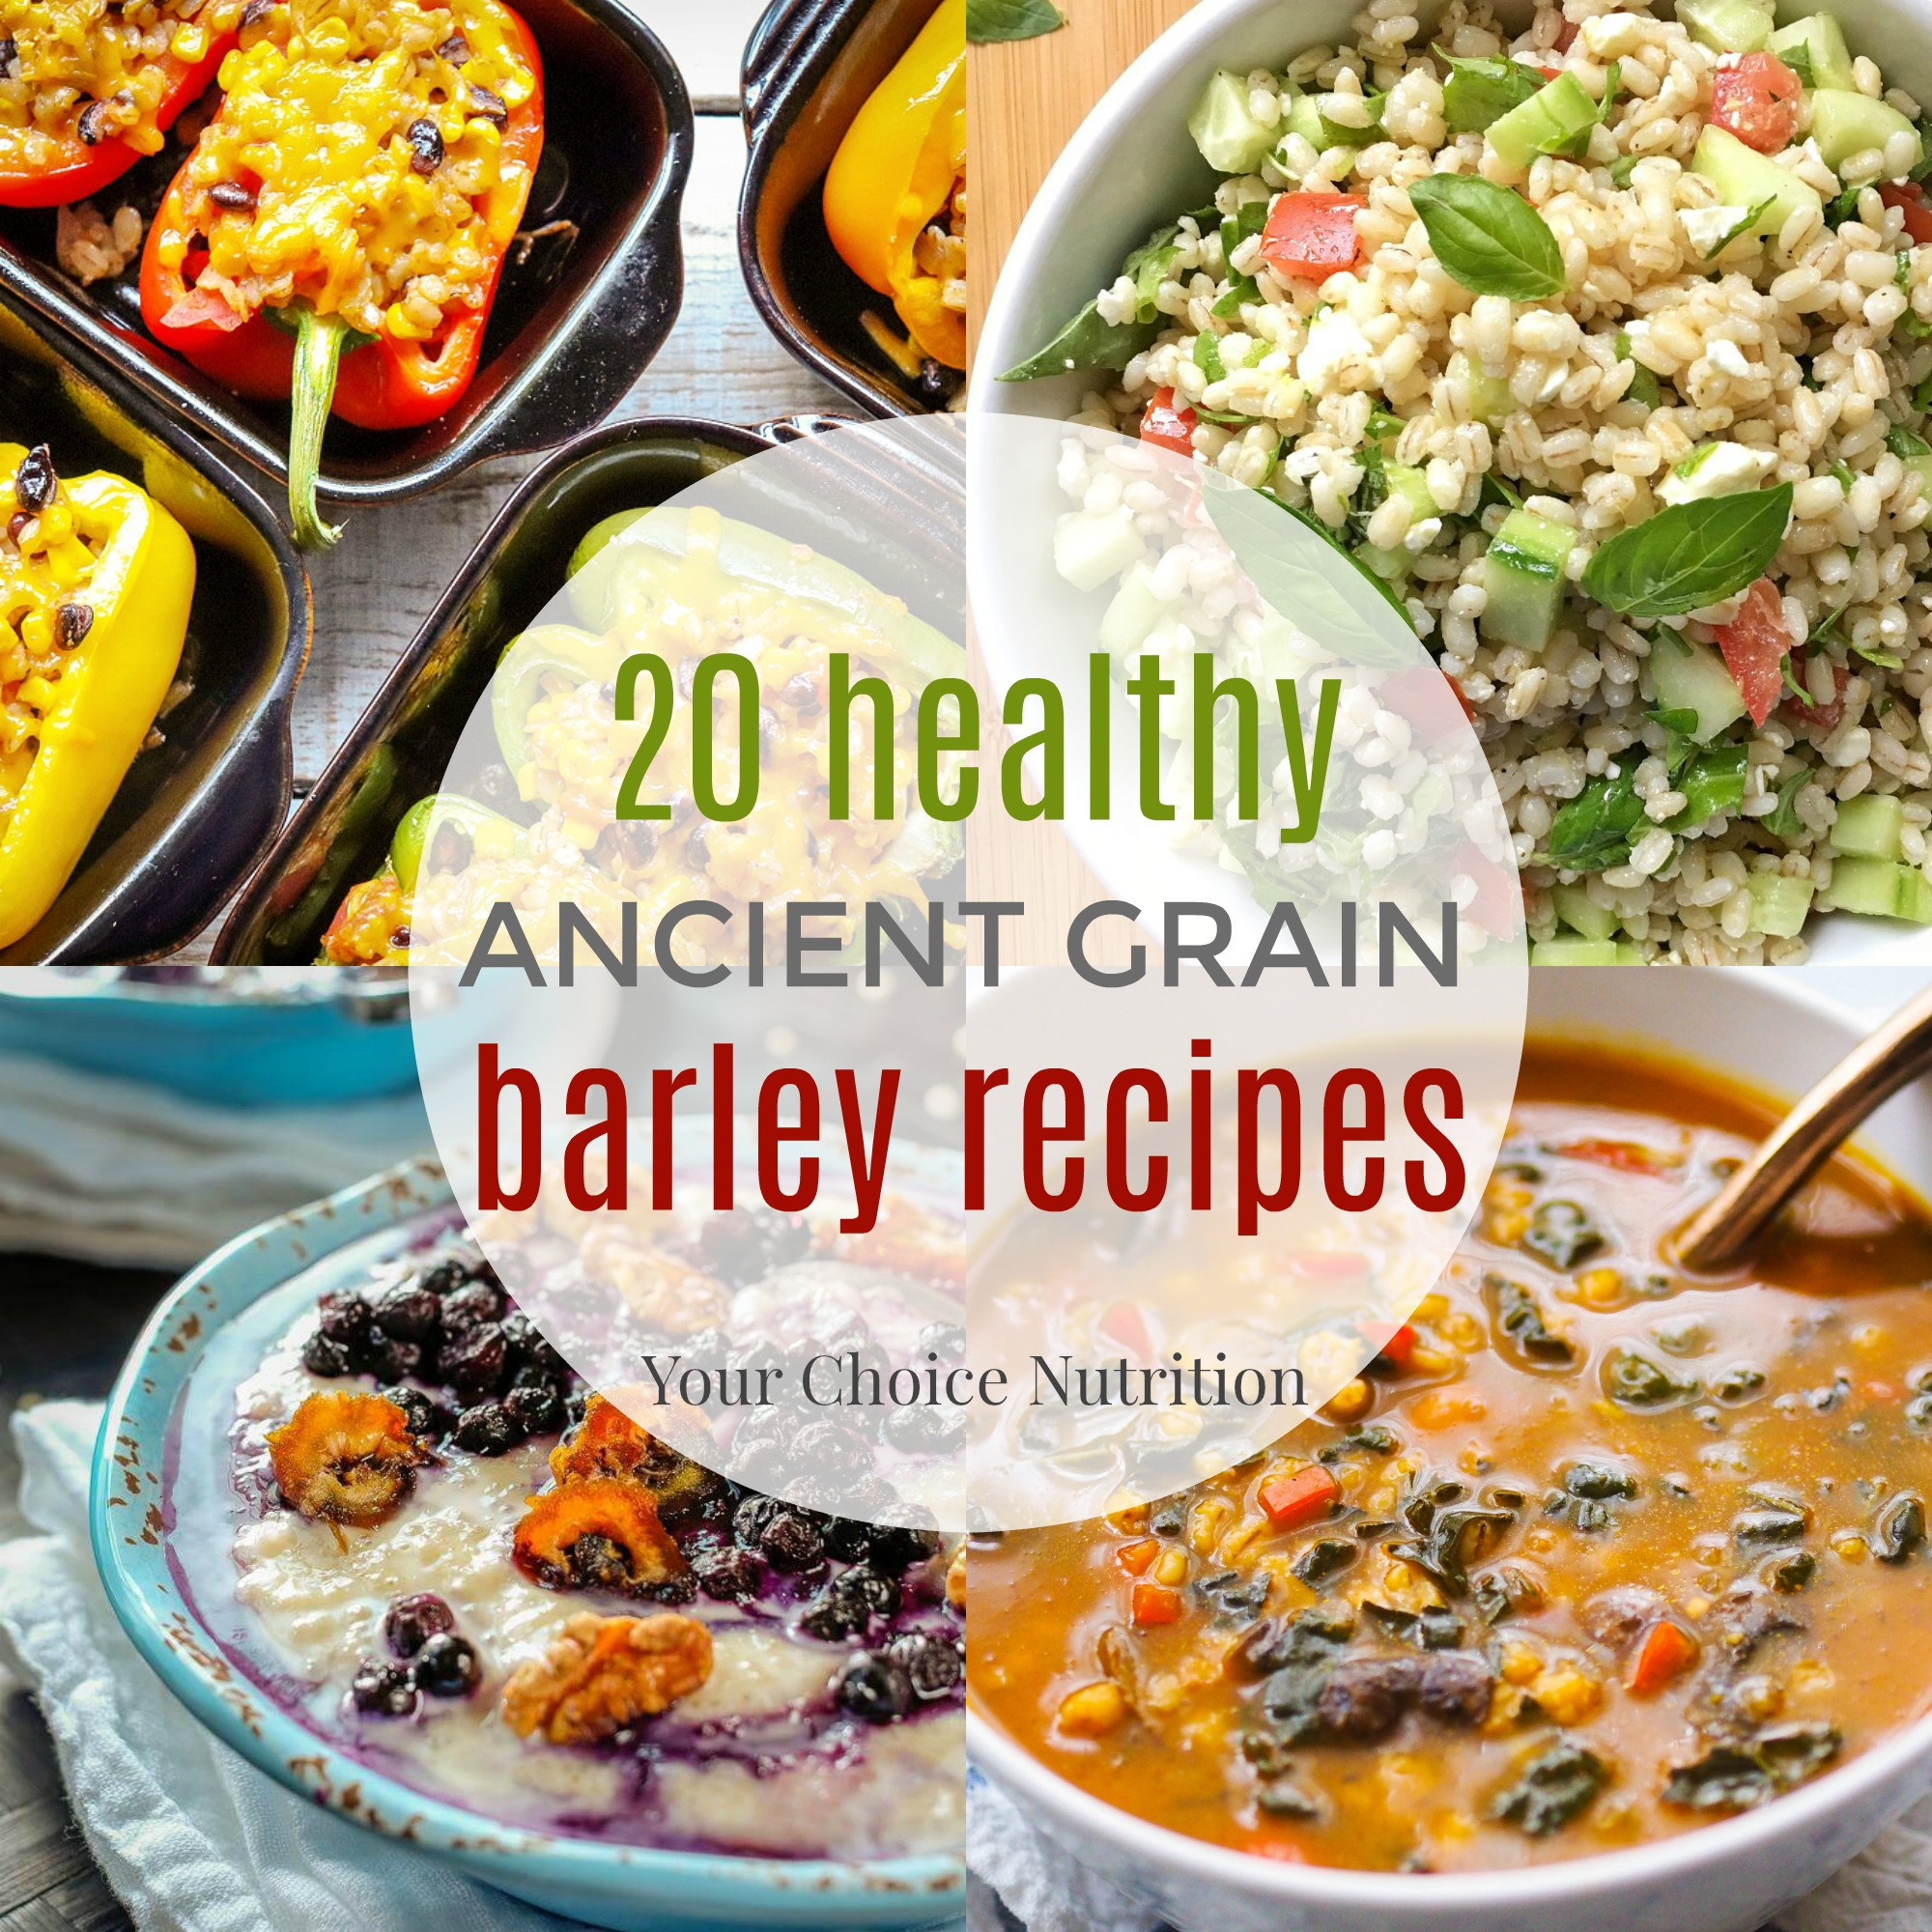 Healthy Barley Recipes
 Ancient Grains Barley Recipes Your Choice Nutrition